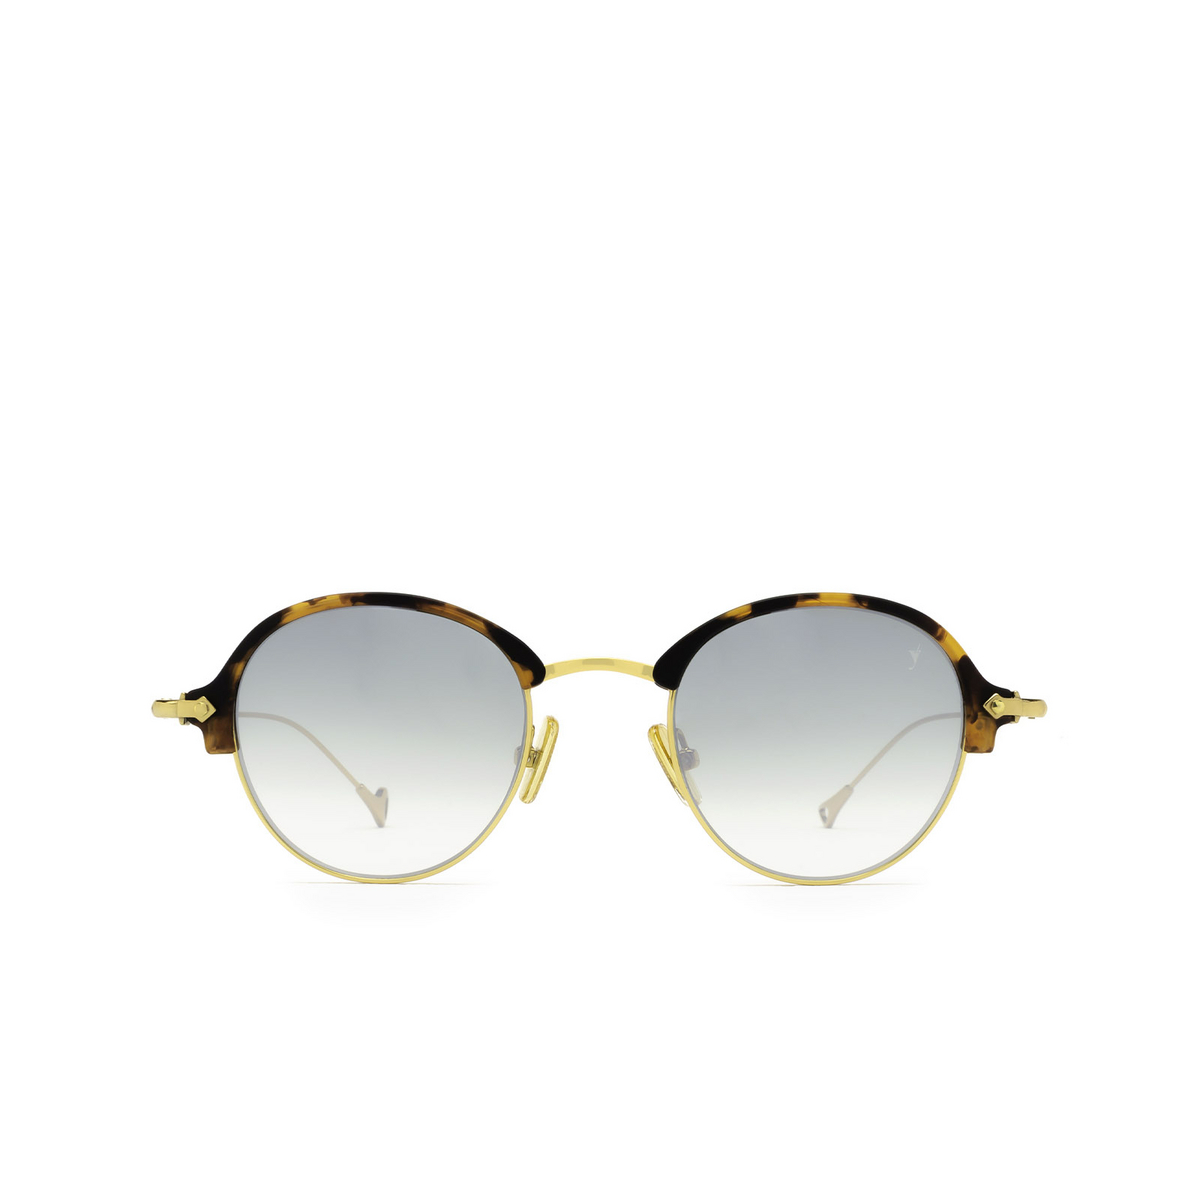 Eyepetizer® Round Sunglasses: Robert color Avana Matt C.G-4-25F - front view.